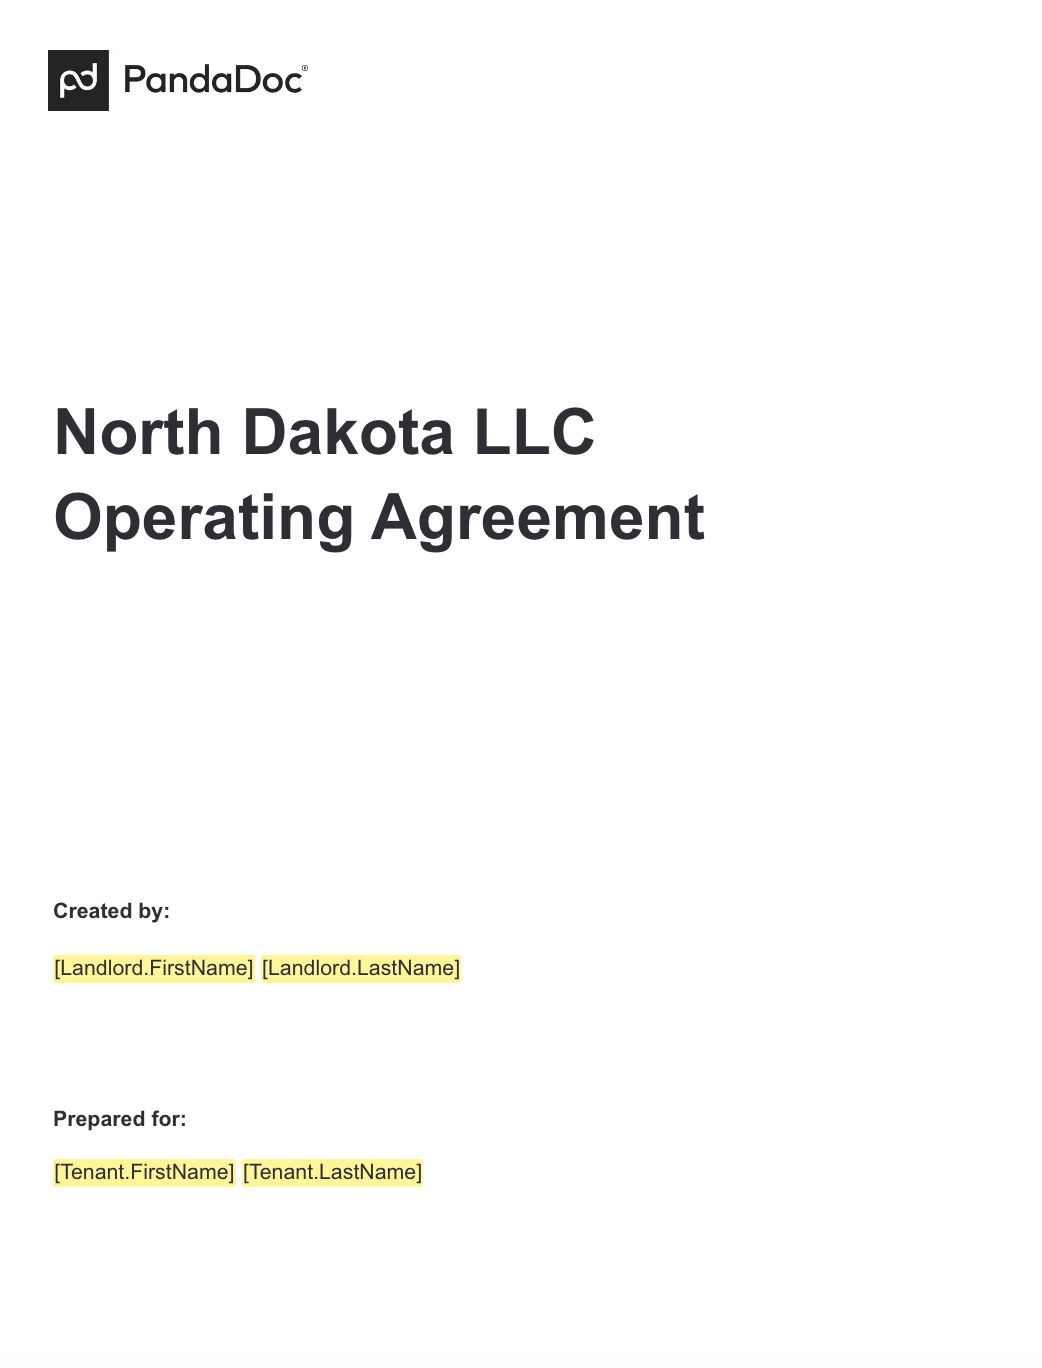 North Dakota LLC Operating Agreements